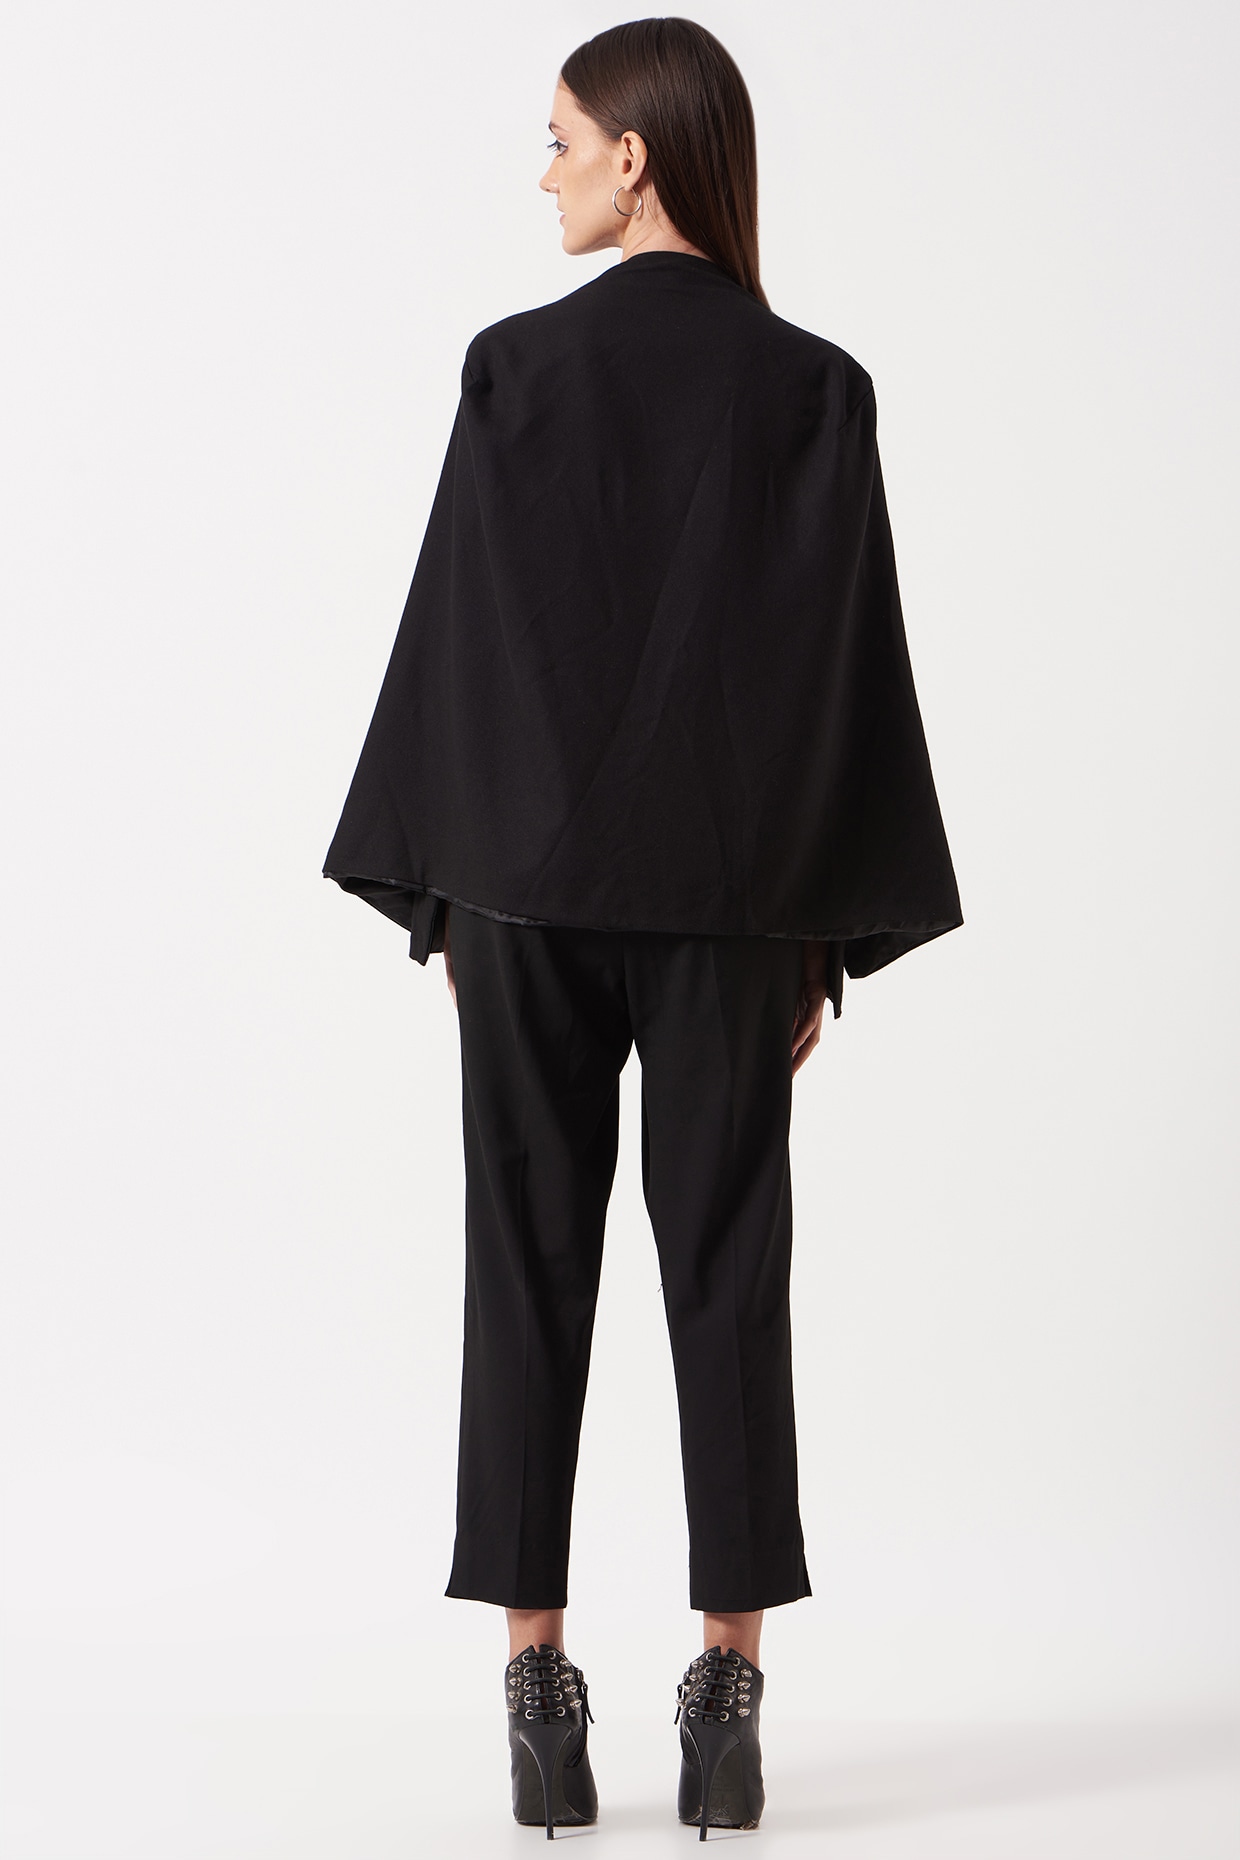 Black Woven Cape Blazer Set Design by The Hem'd at Pernia's Pop Up